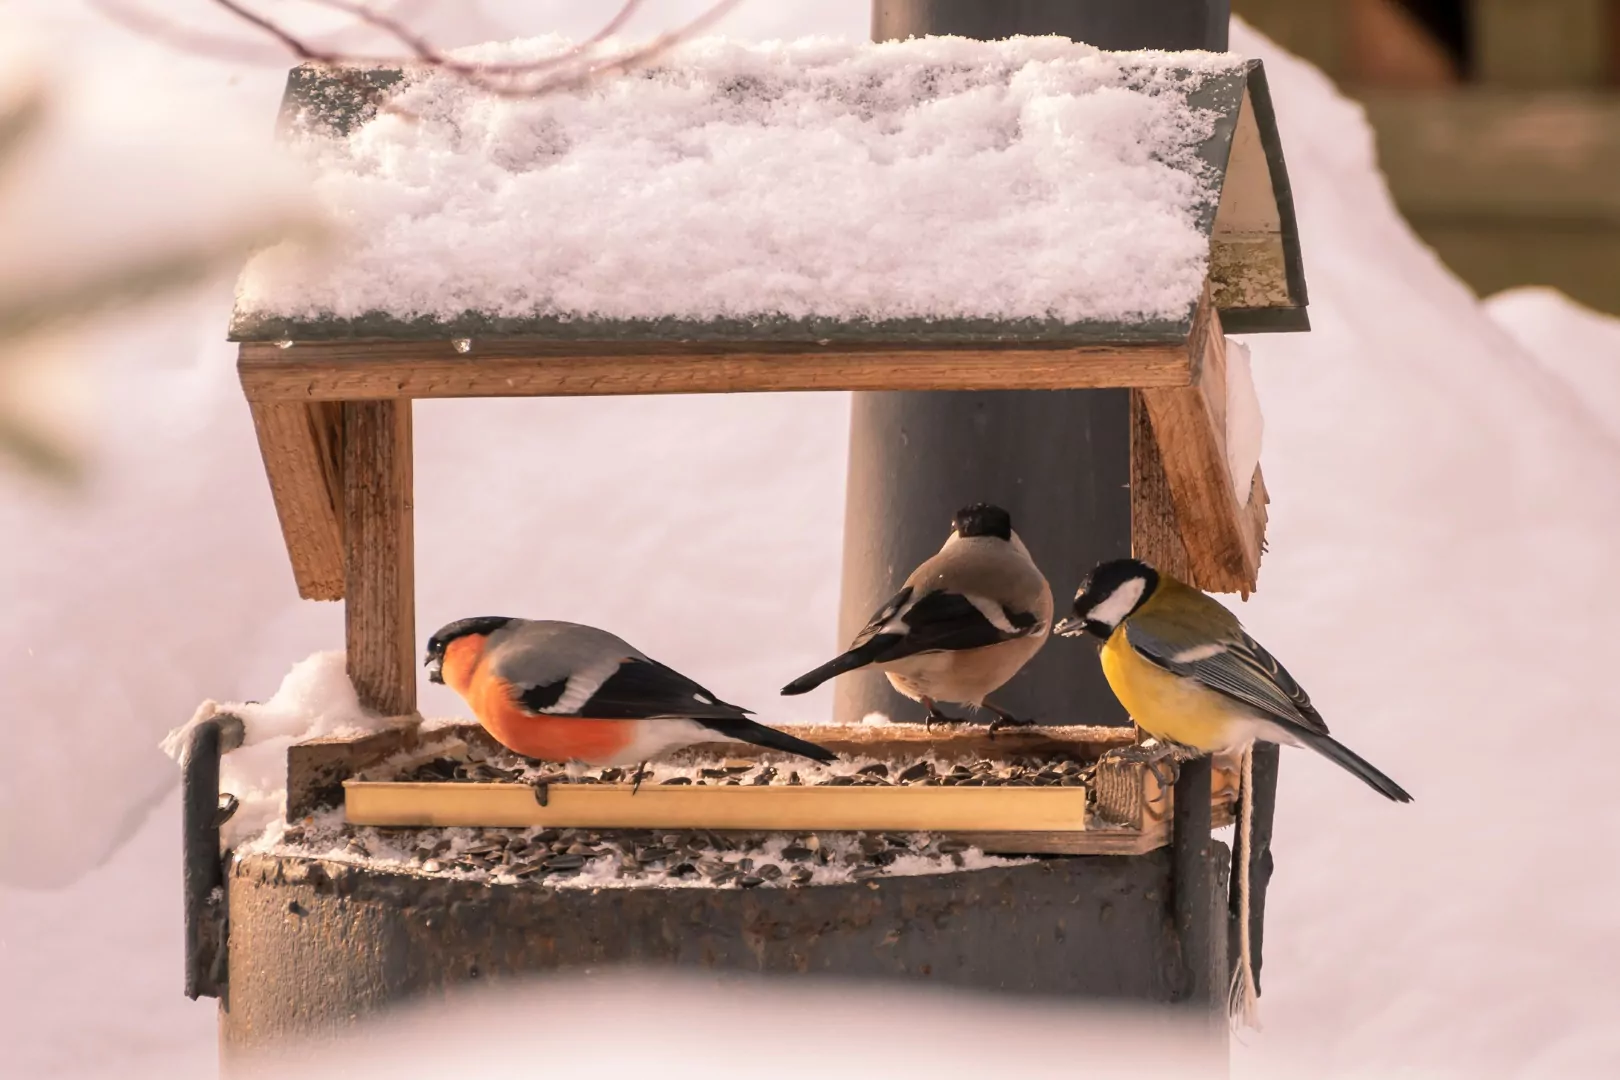 Дари тепло: квест про птиц для взрослых и детей, фото